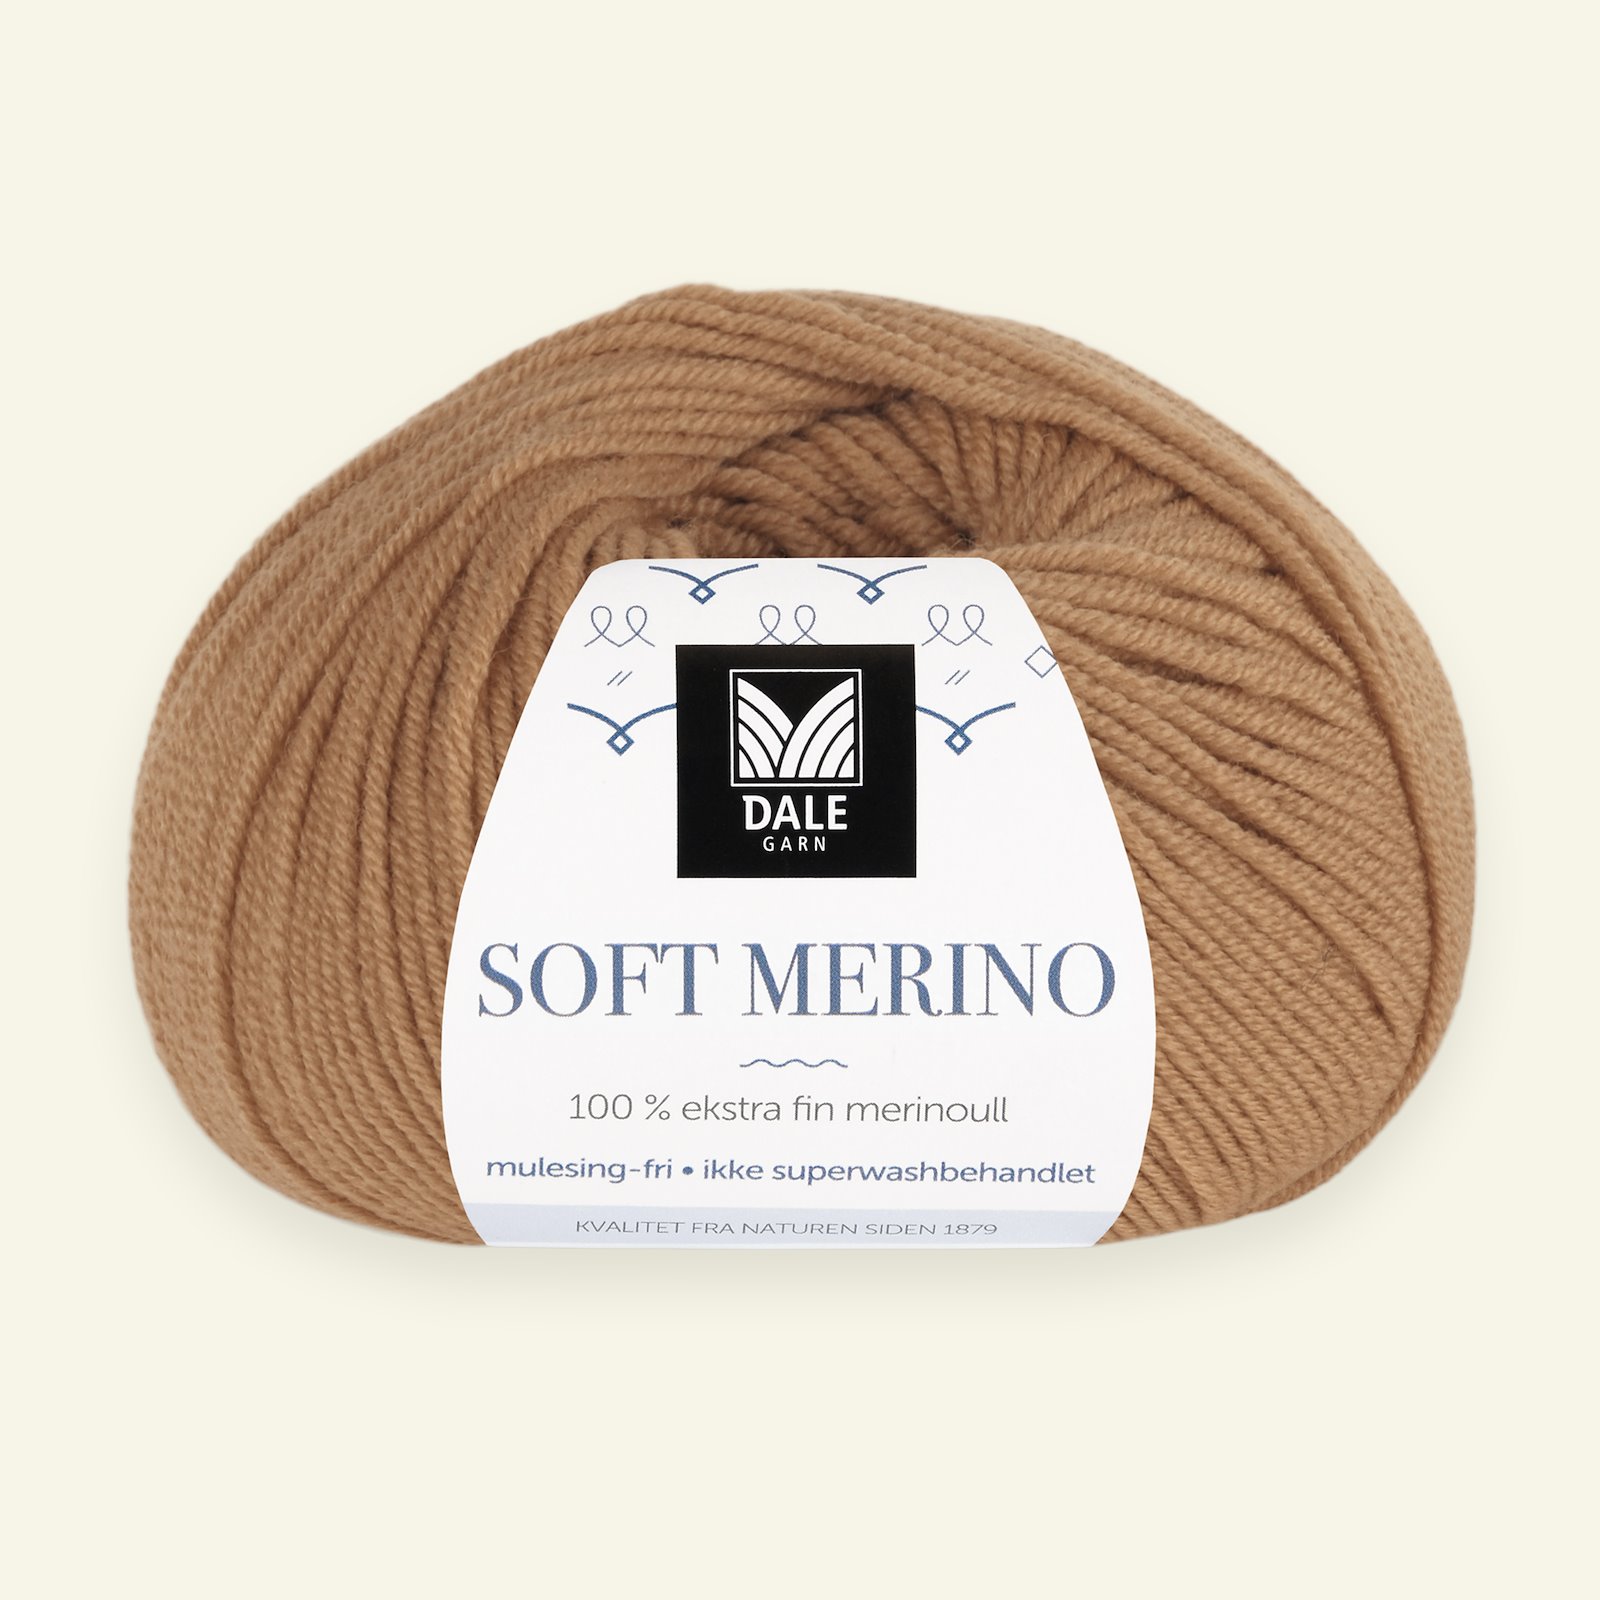 Dale Garn, 100% extra fint merinogarn "Soft Merino", karamell (3016) 90000337_pack